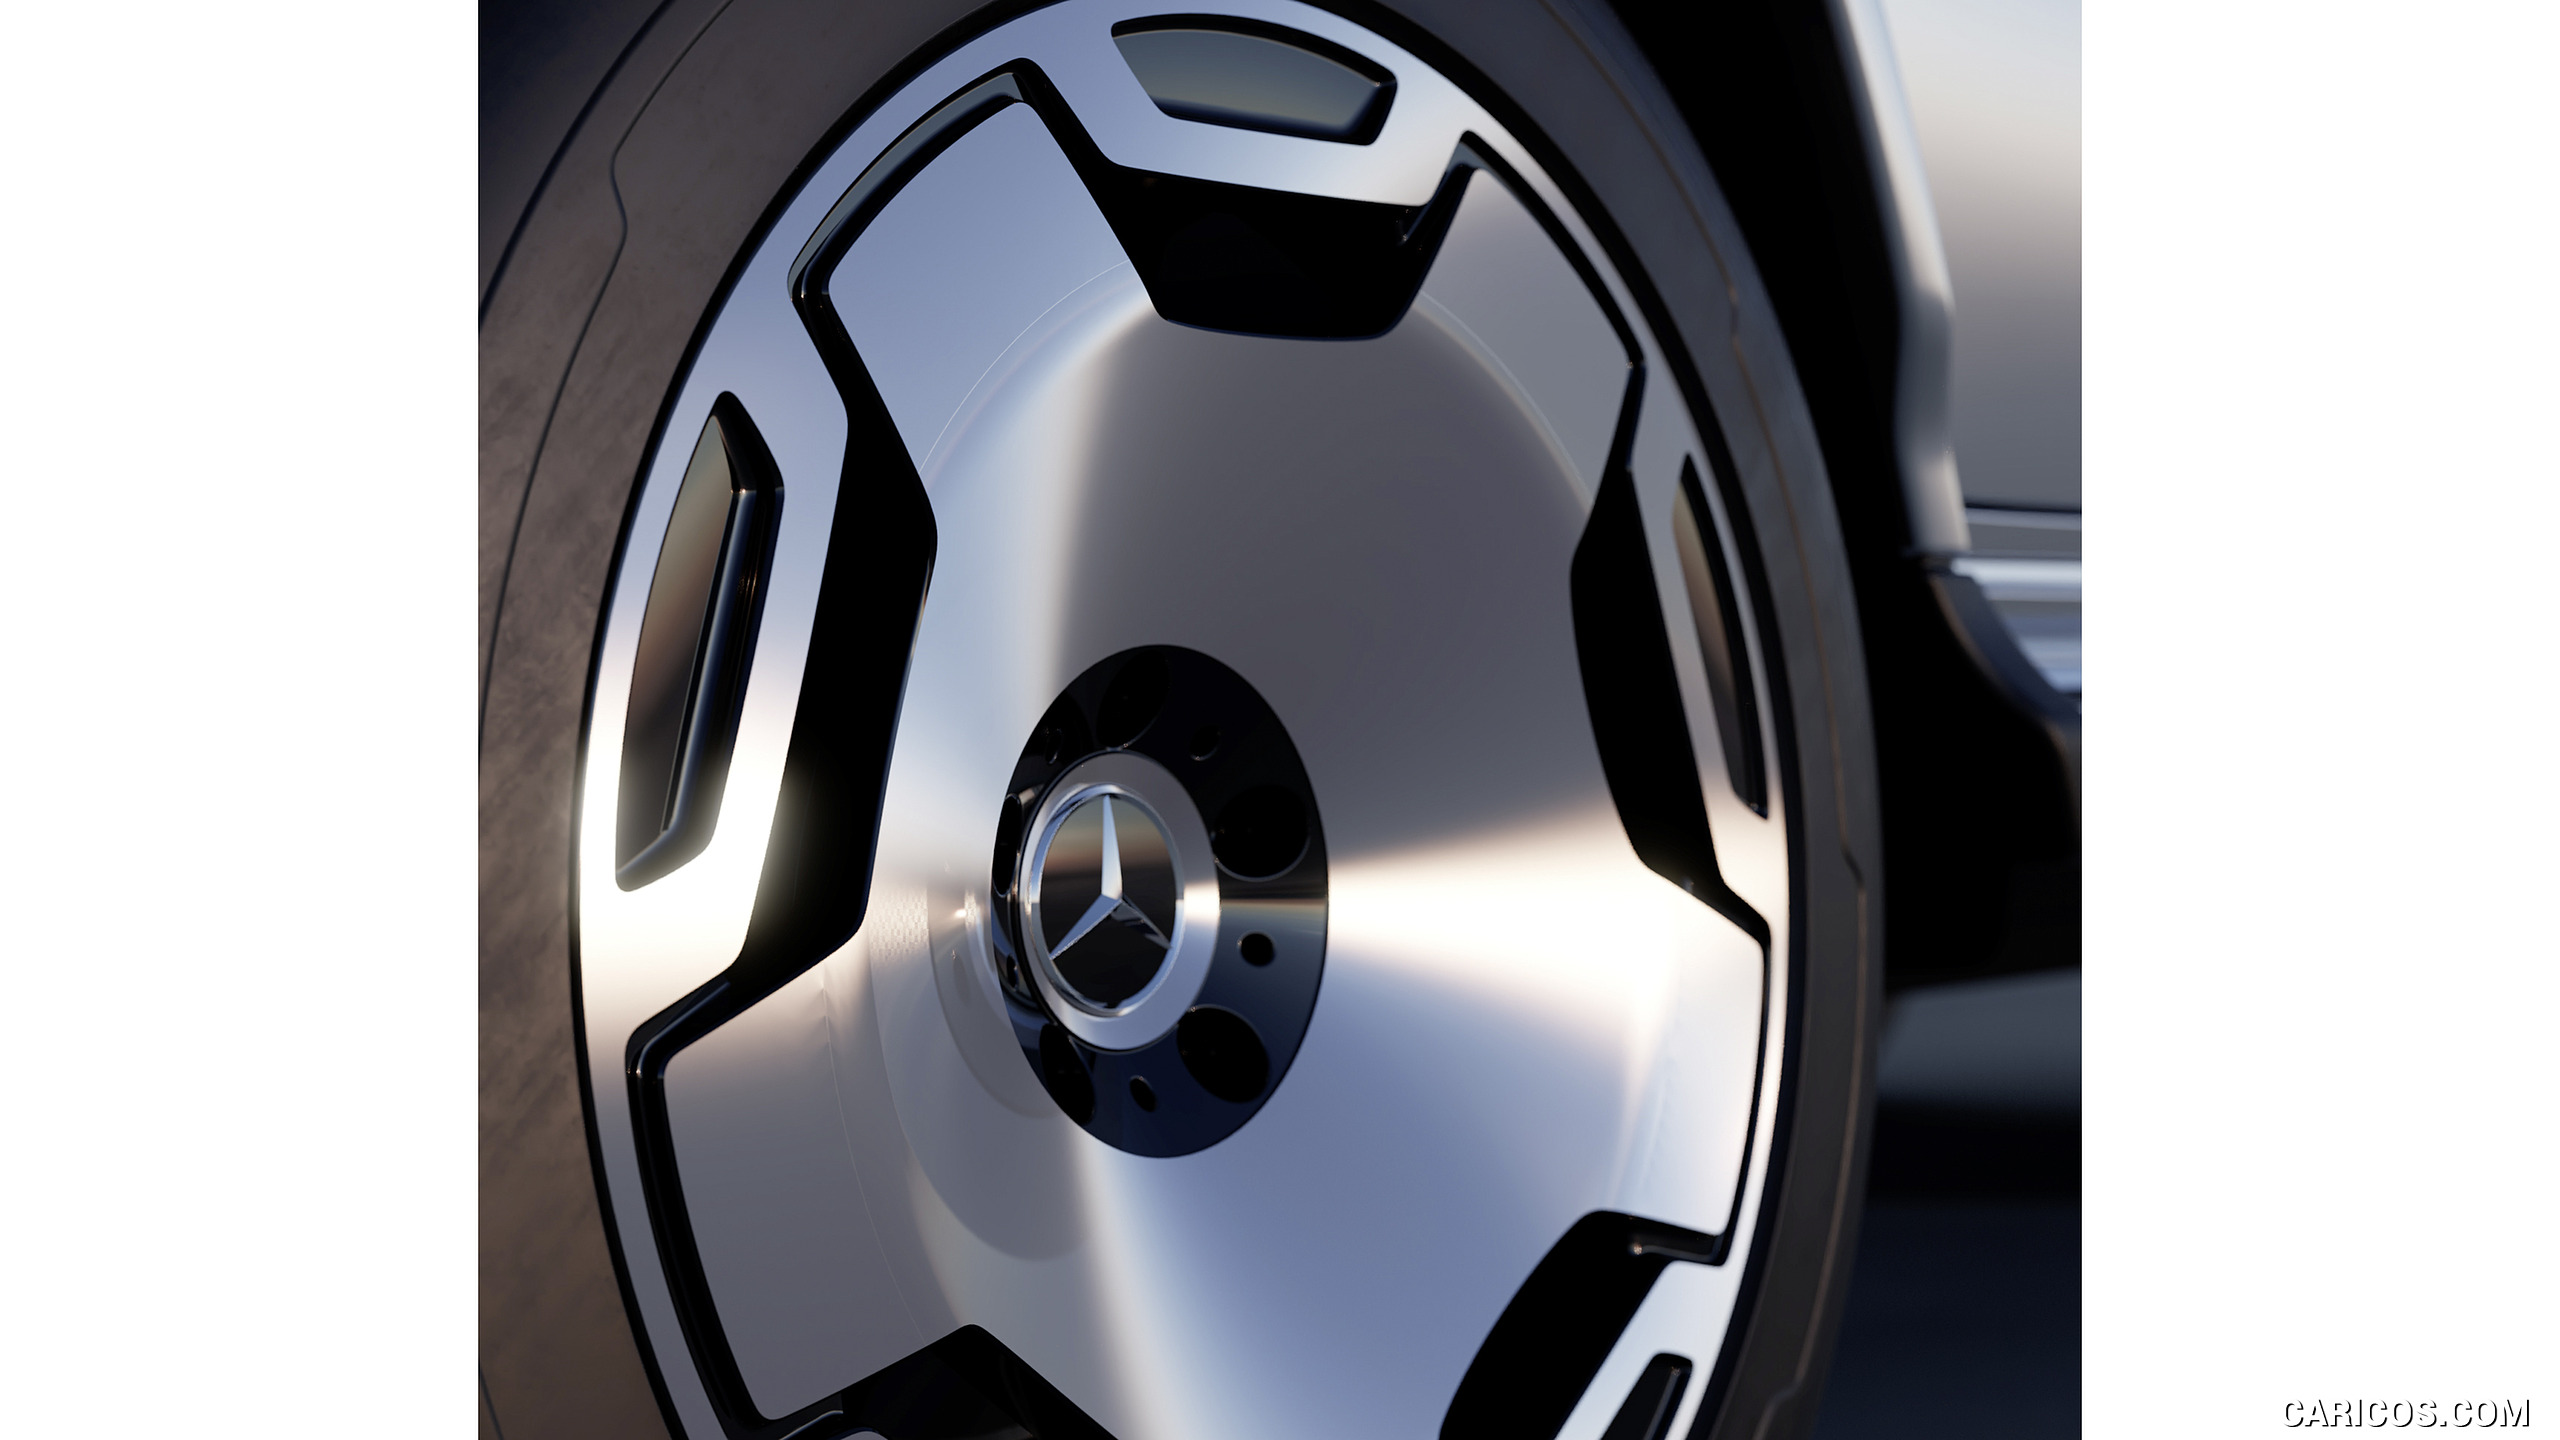 2021 Mercedes-Benz EQG Electric G-Class Concept - Wheel, #7 of 19